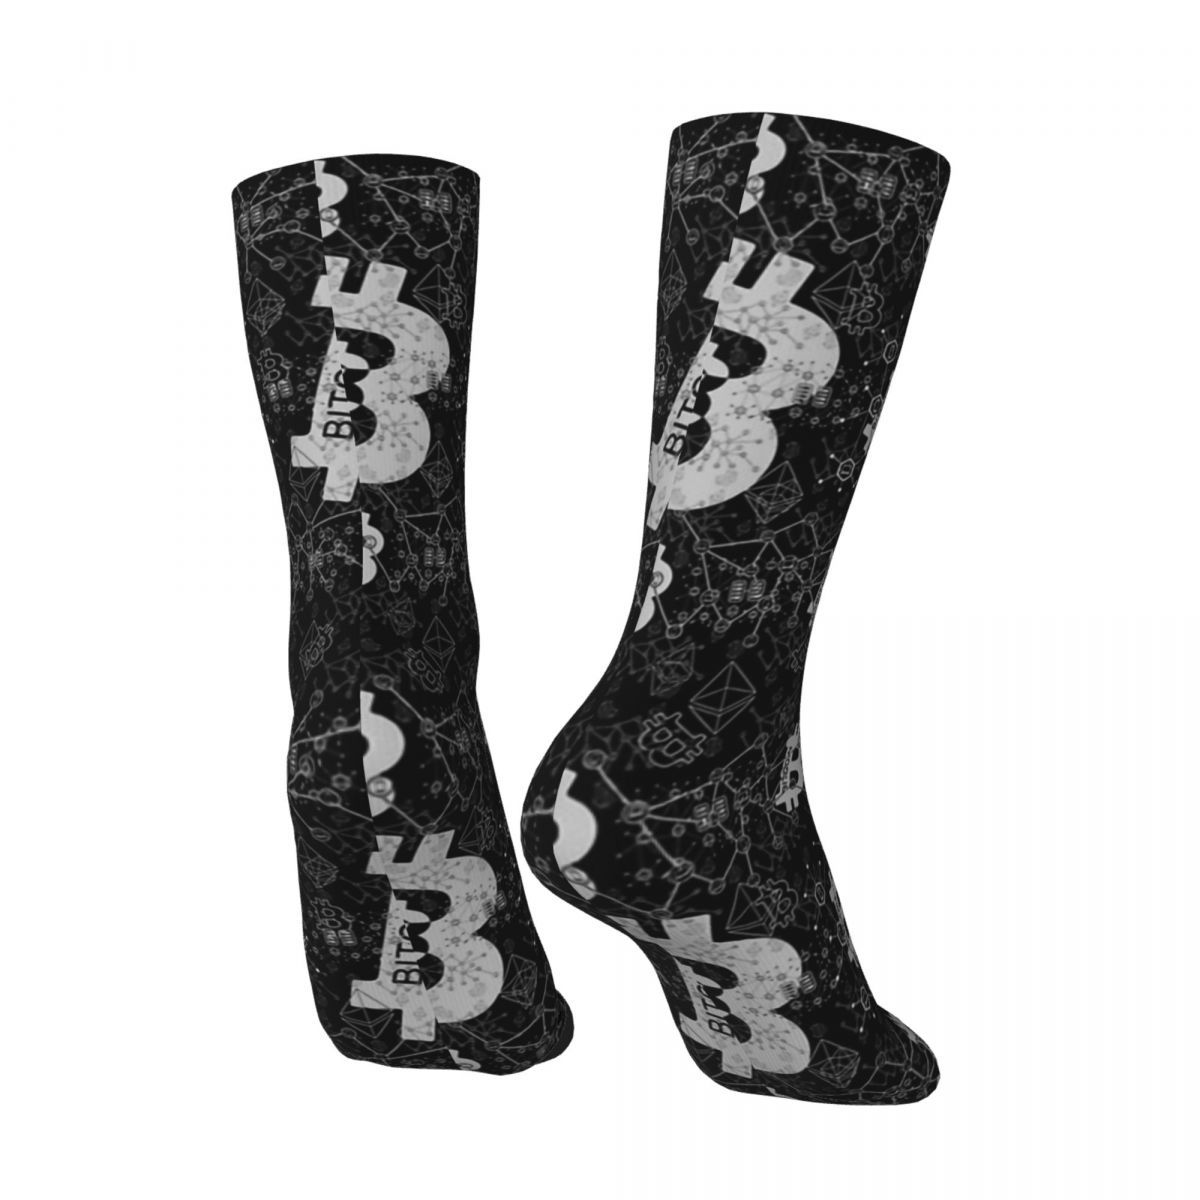 Socks Bitcoin-themed